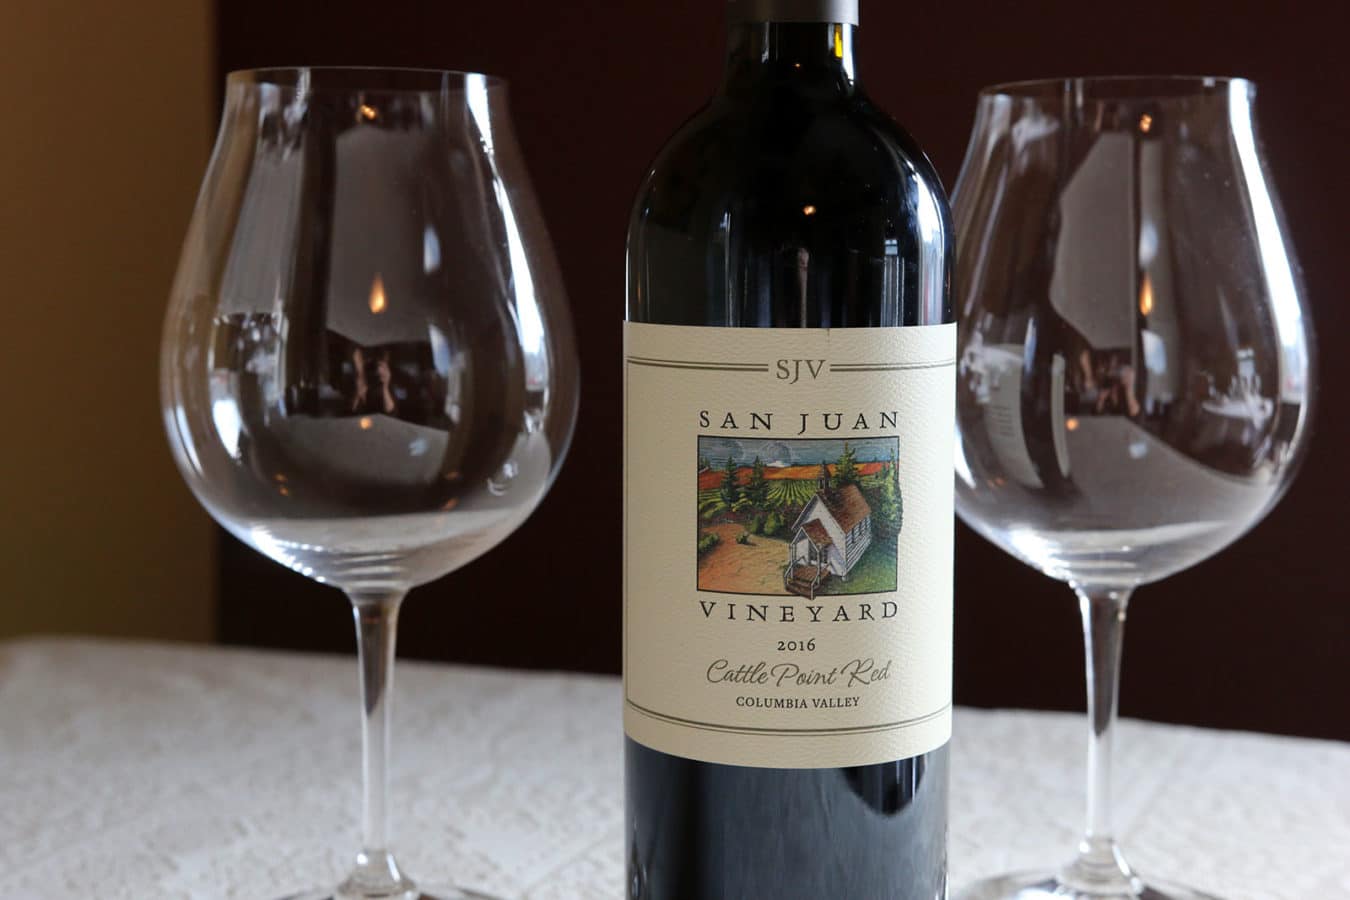 San Juan Vineyard's wine bottle with two wine glasses